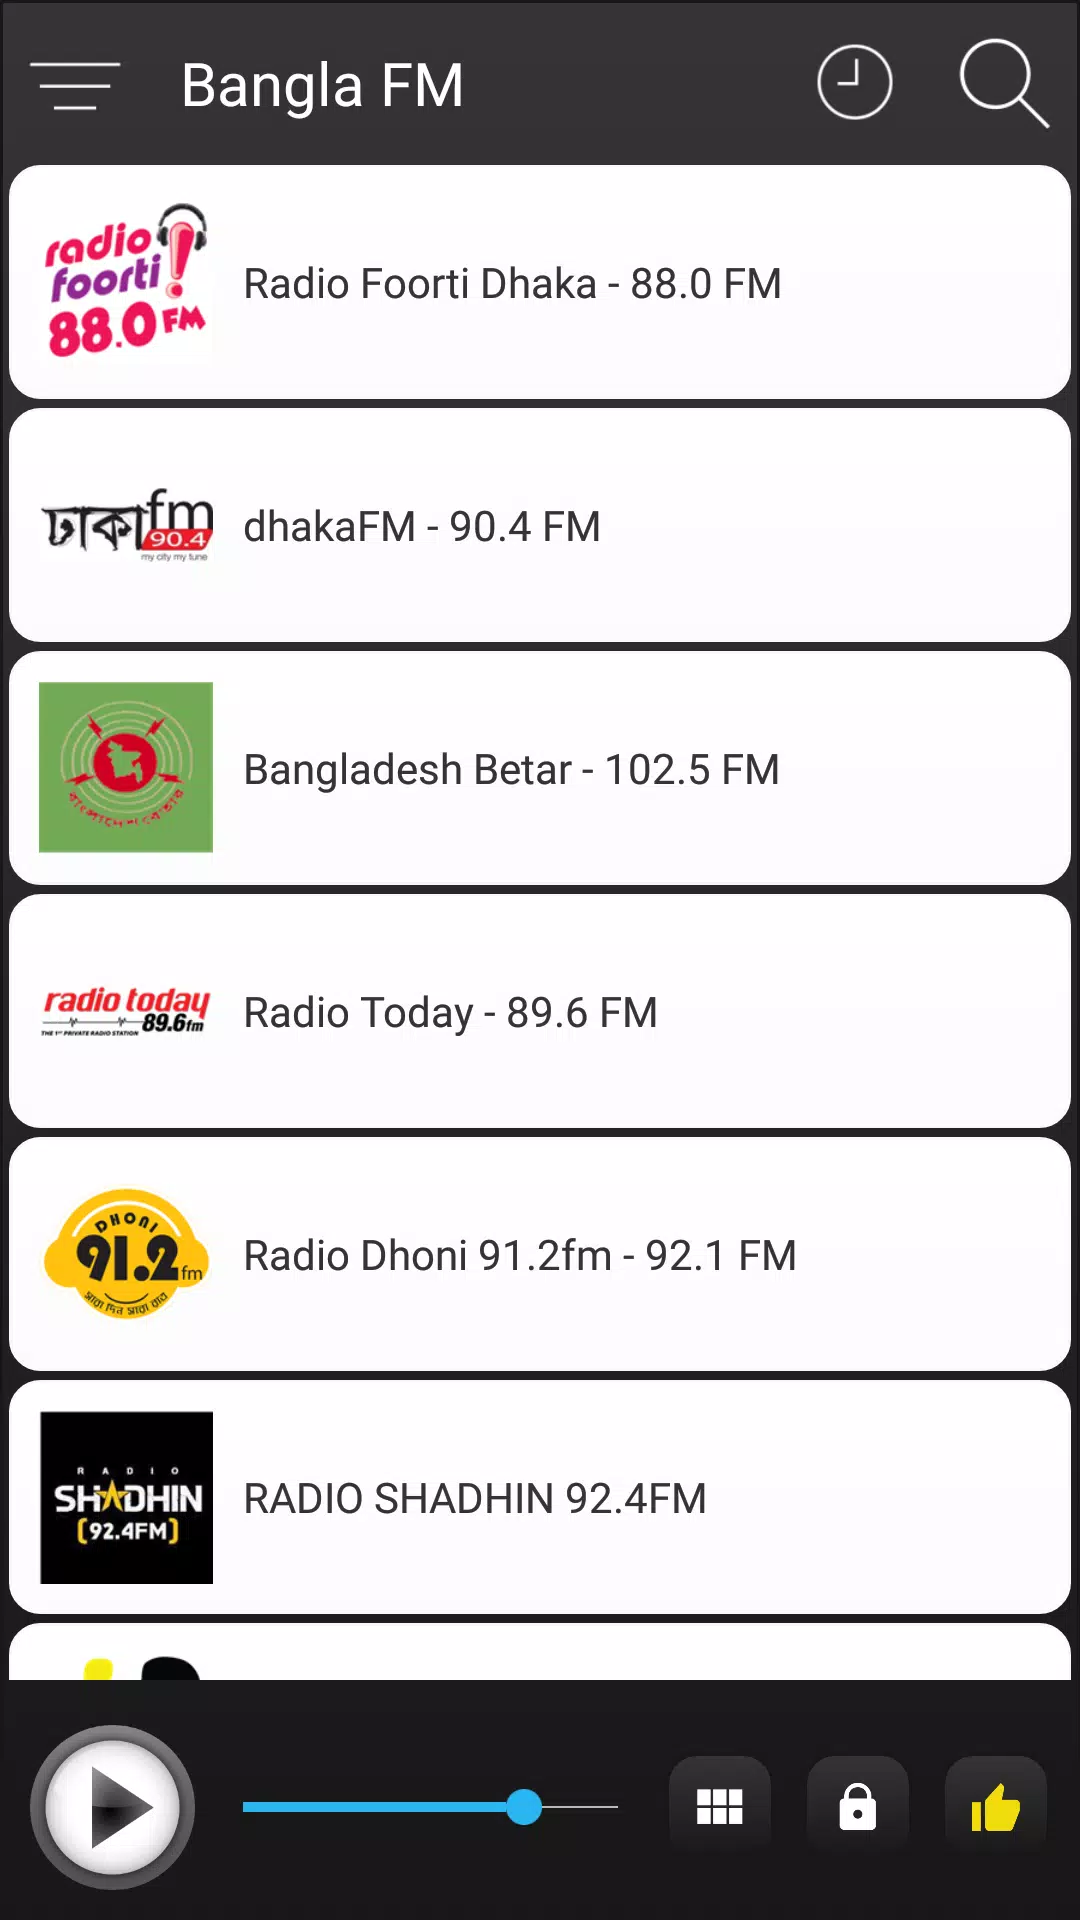 Bangladesh Radio - Bangla FM AM Online Stations APK for Android Download